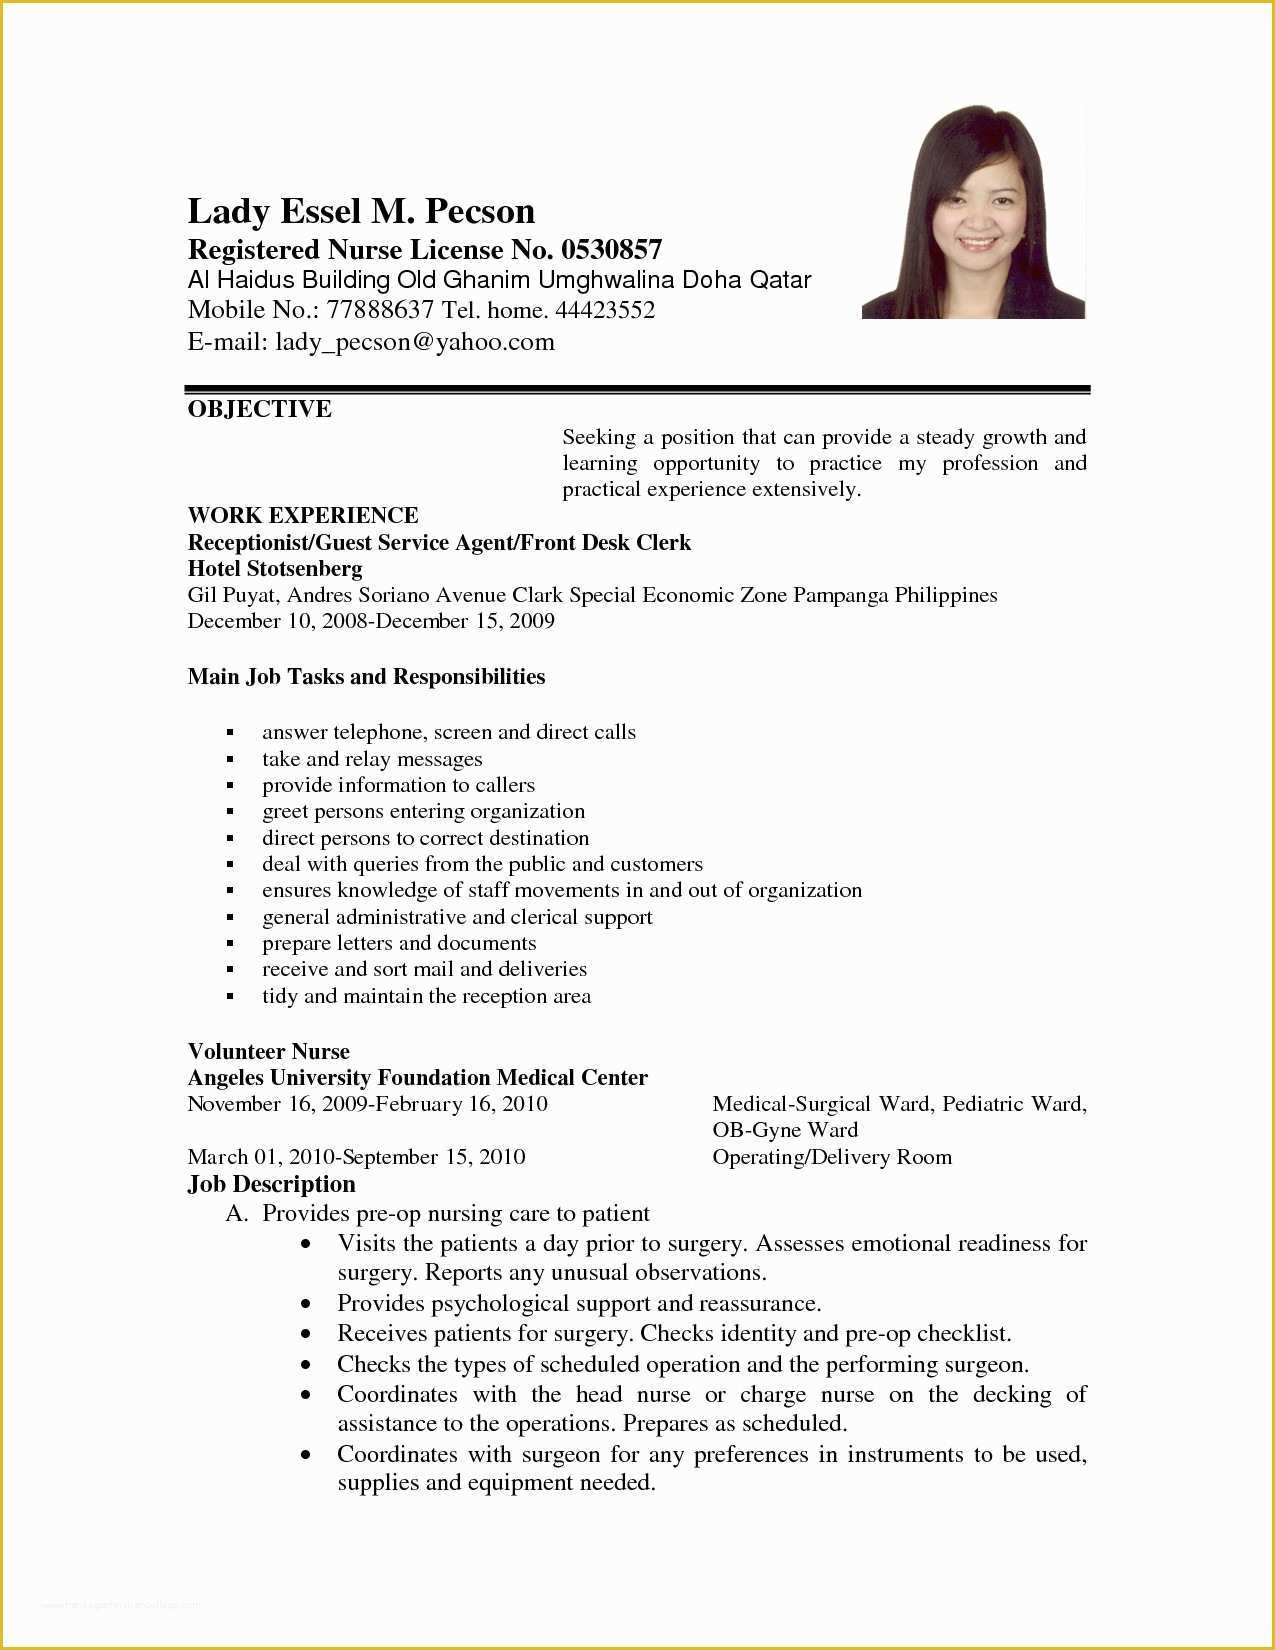 Free Lpn Resume Template Download Of Licensed Practical Nurse Sample Resume Free Downloads